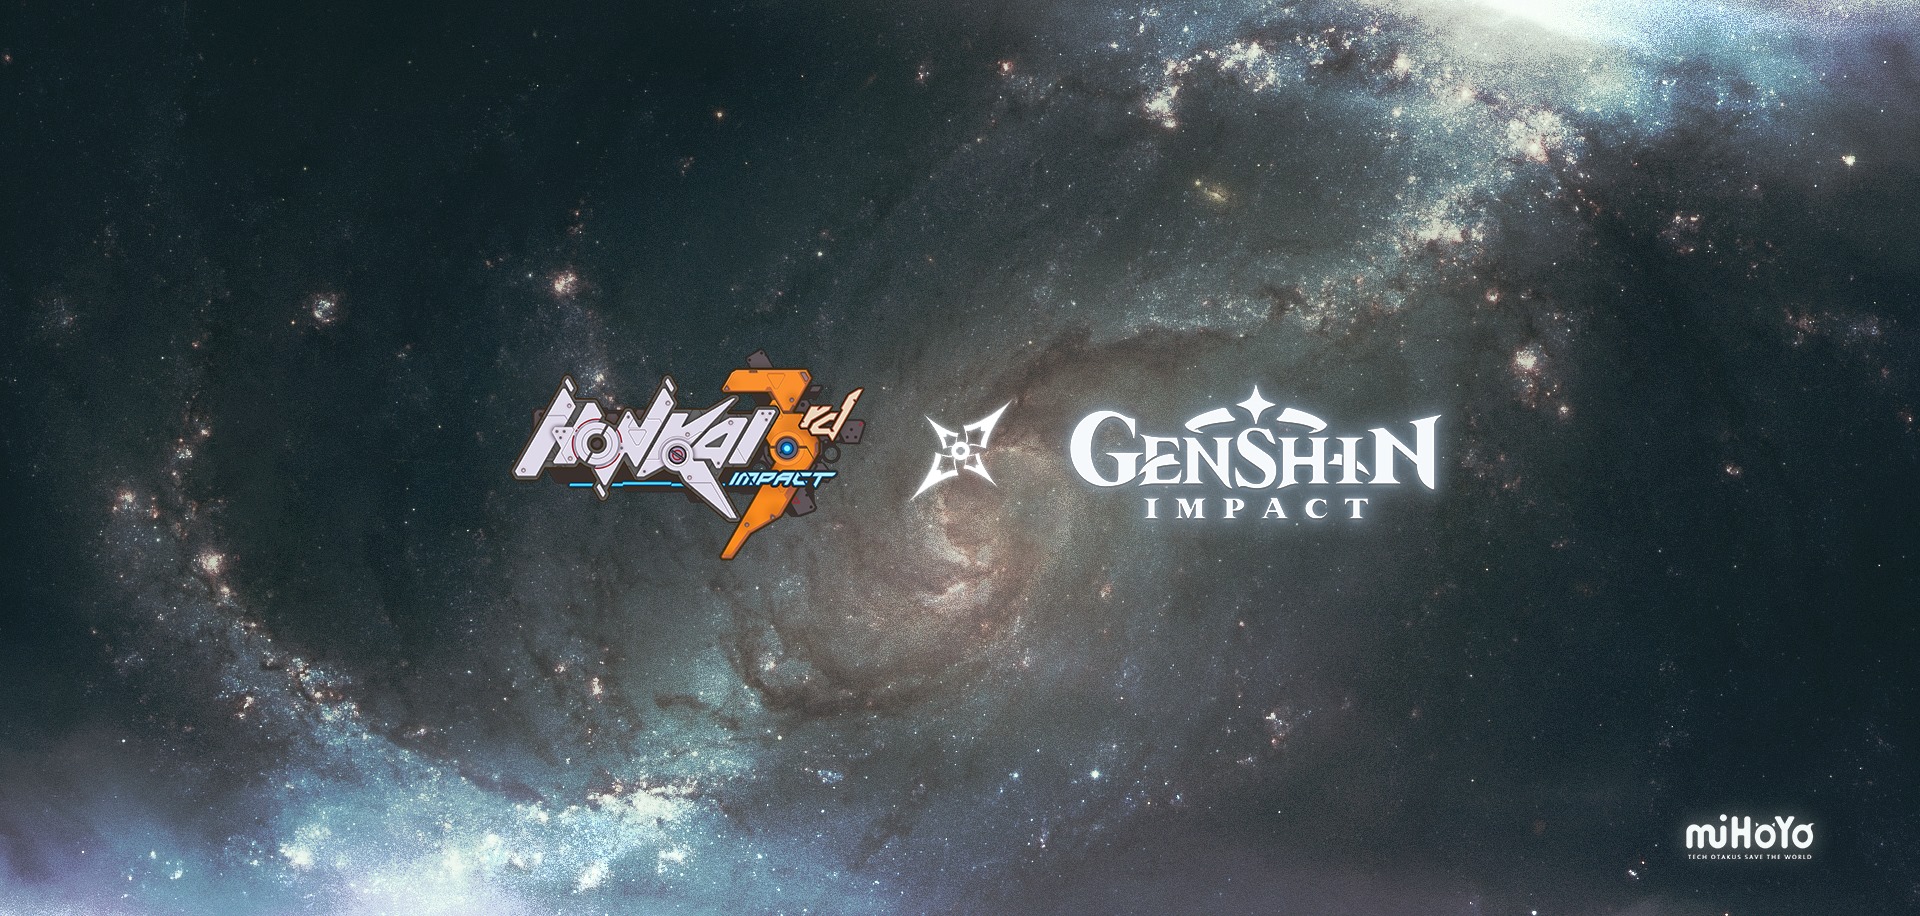 Honkai Impact 3 Collaborates With Genshin Impact!